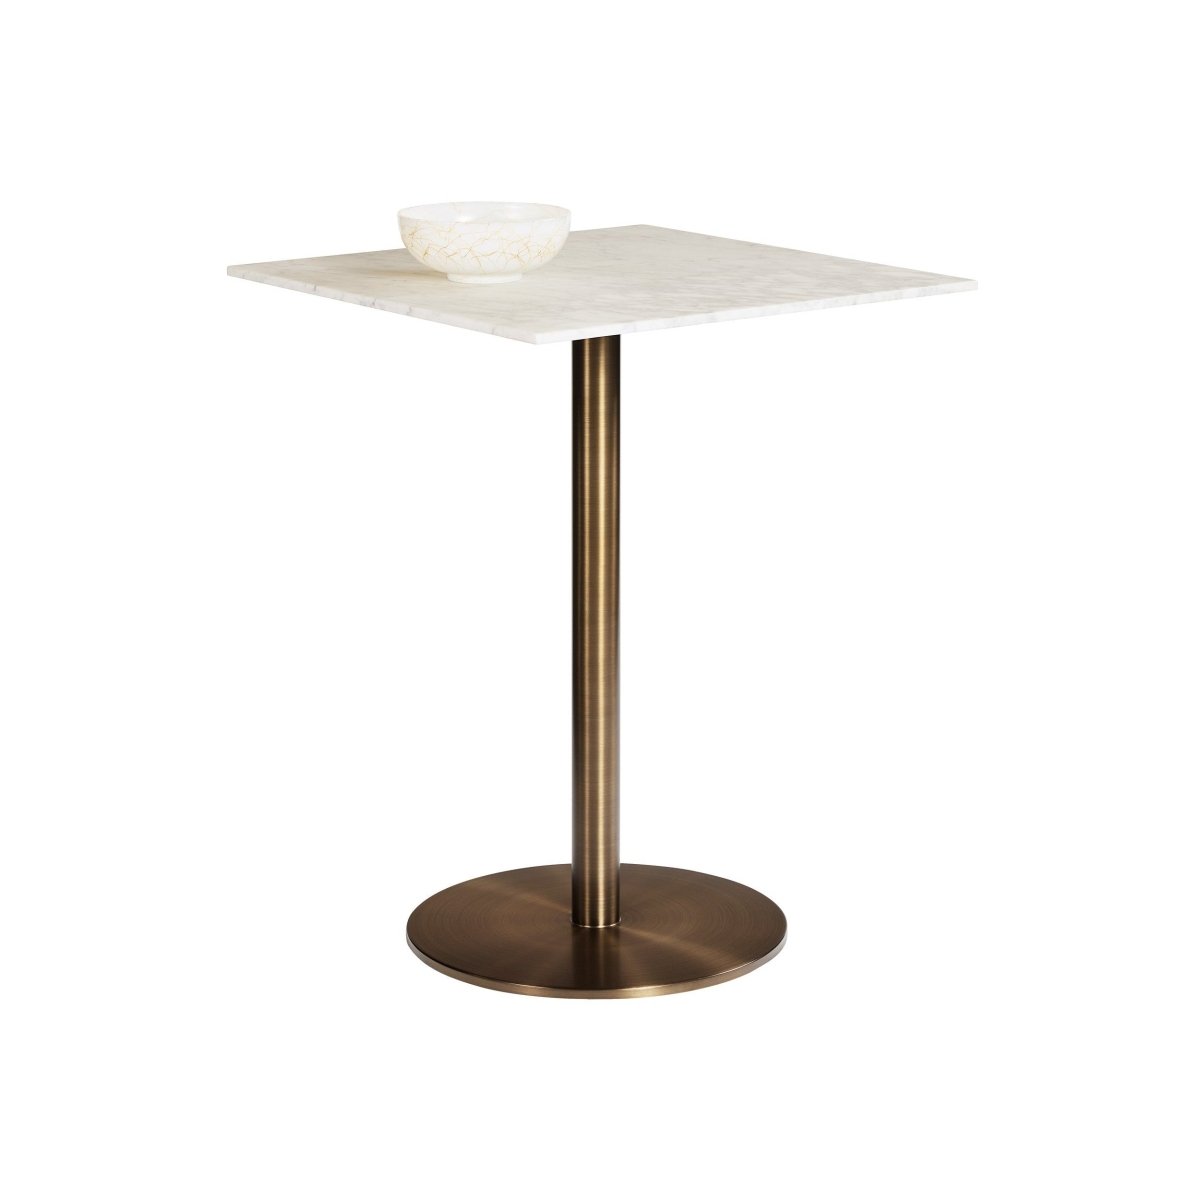 Sunpan Enco Bar Table - Square - 108339 - Sunpan - $2398.00